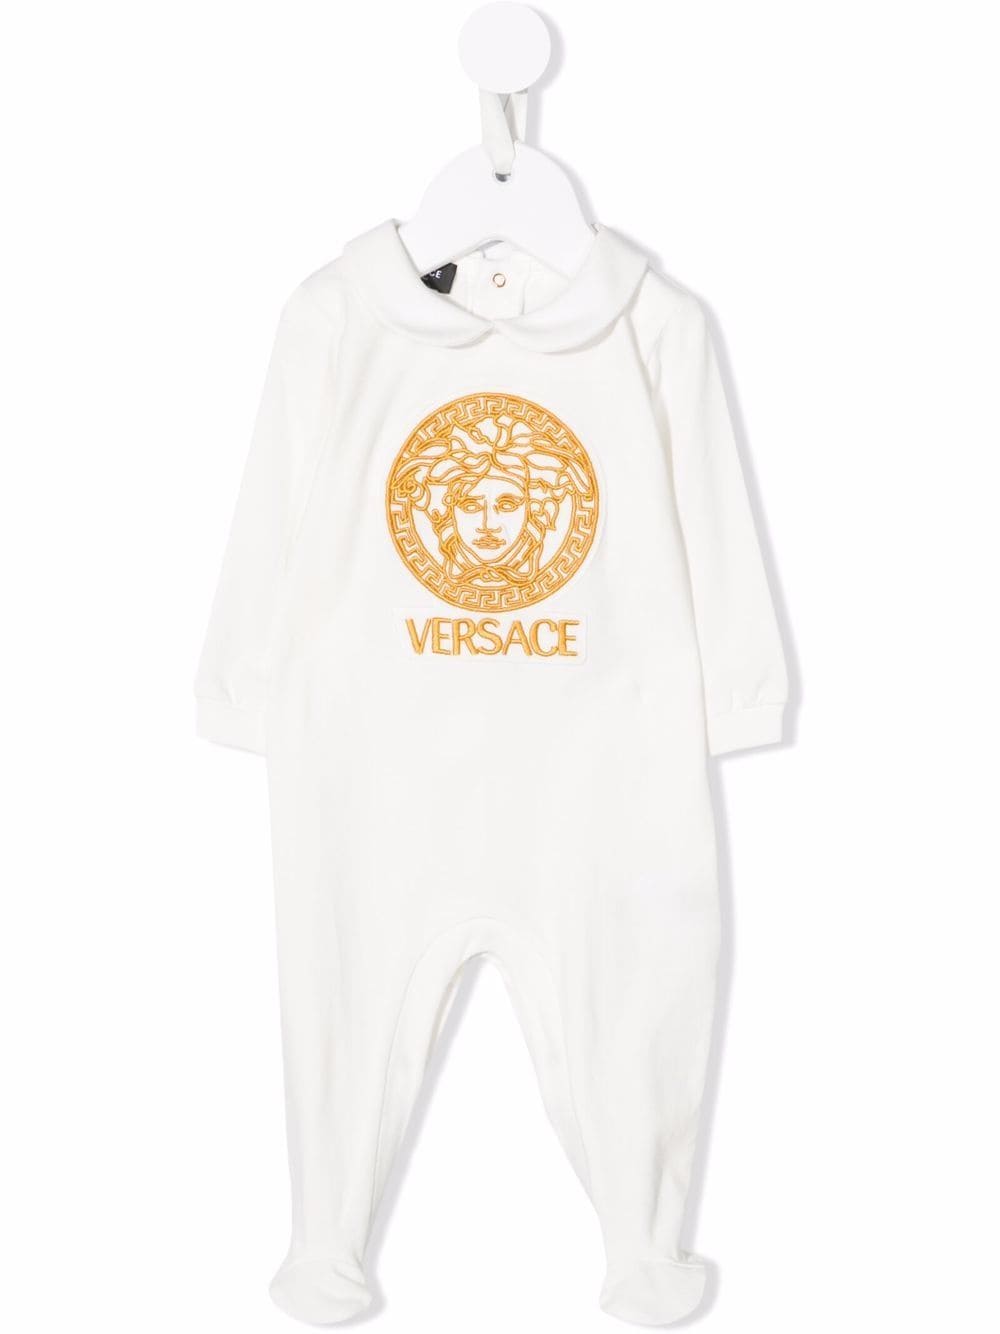 VERSACE BABY Logo Embroidered Babygrow White/Gold - MAISONDEFASHION.COM